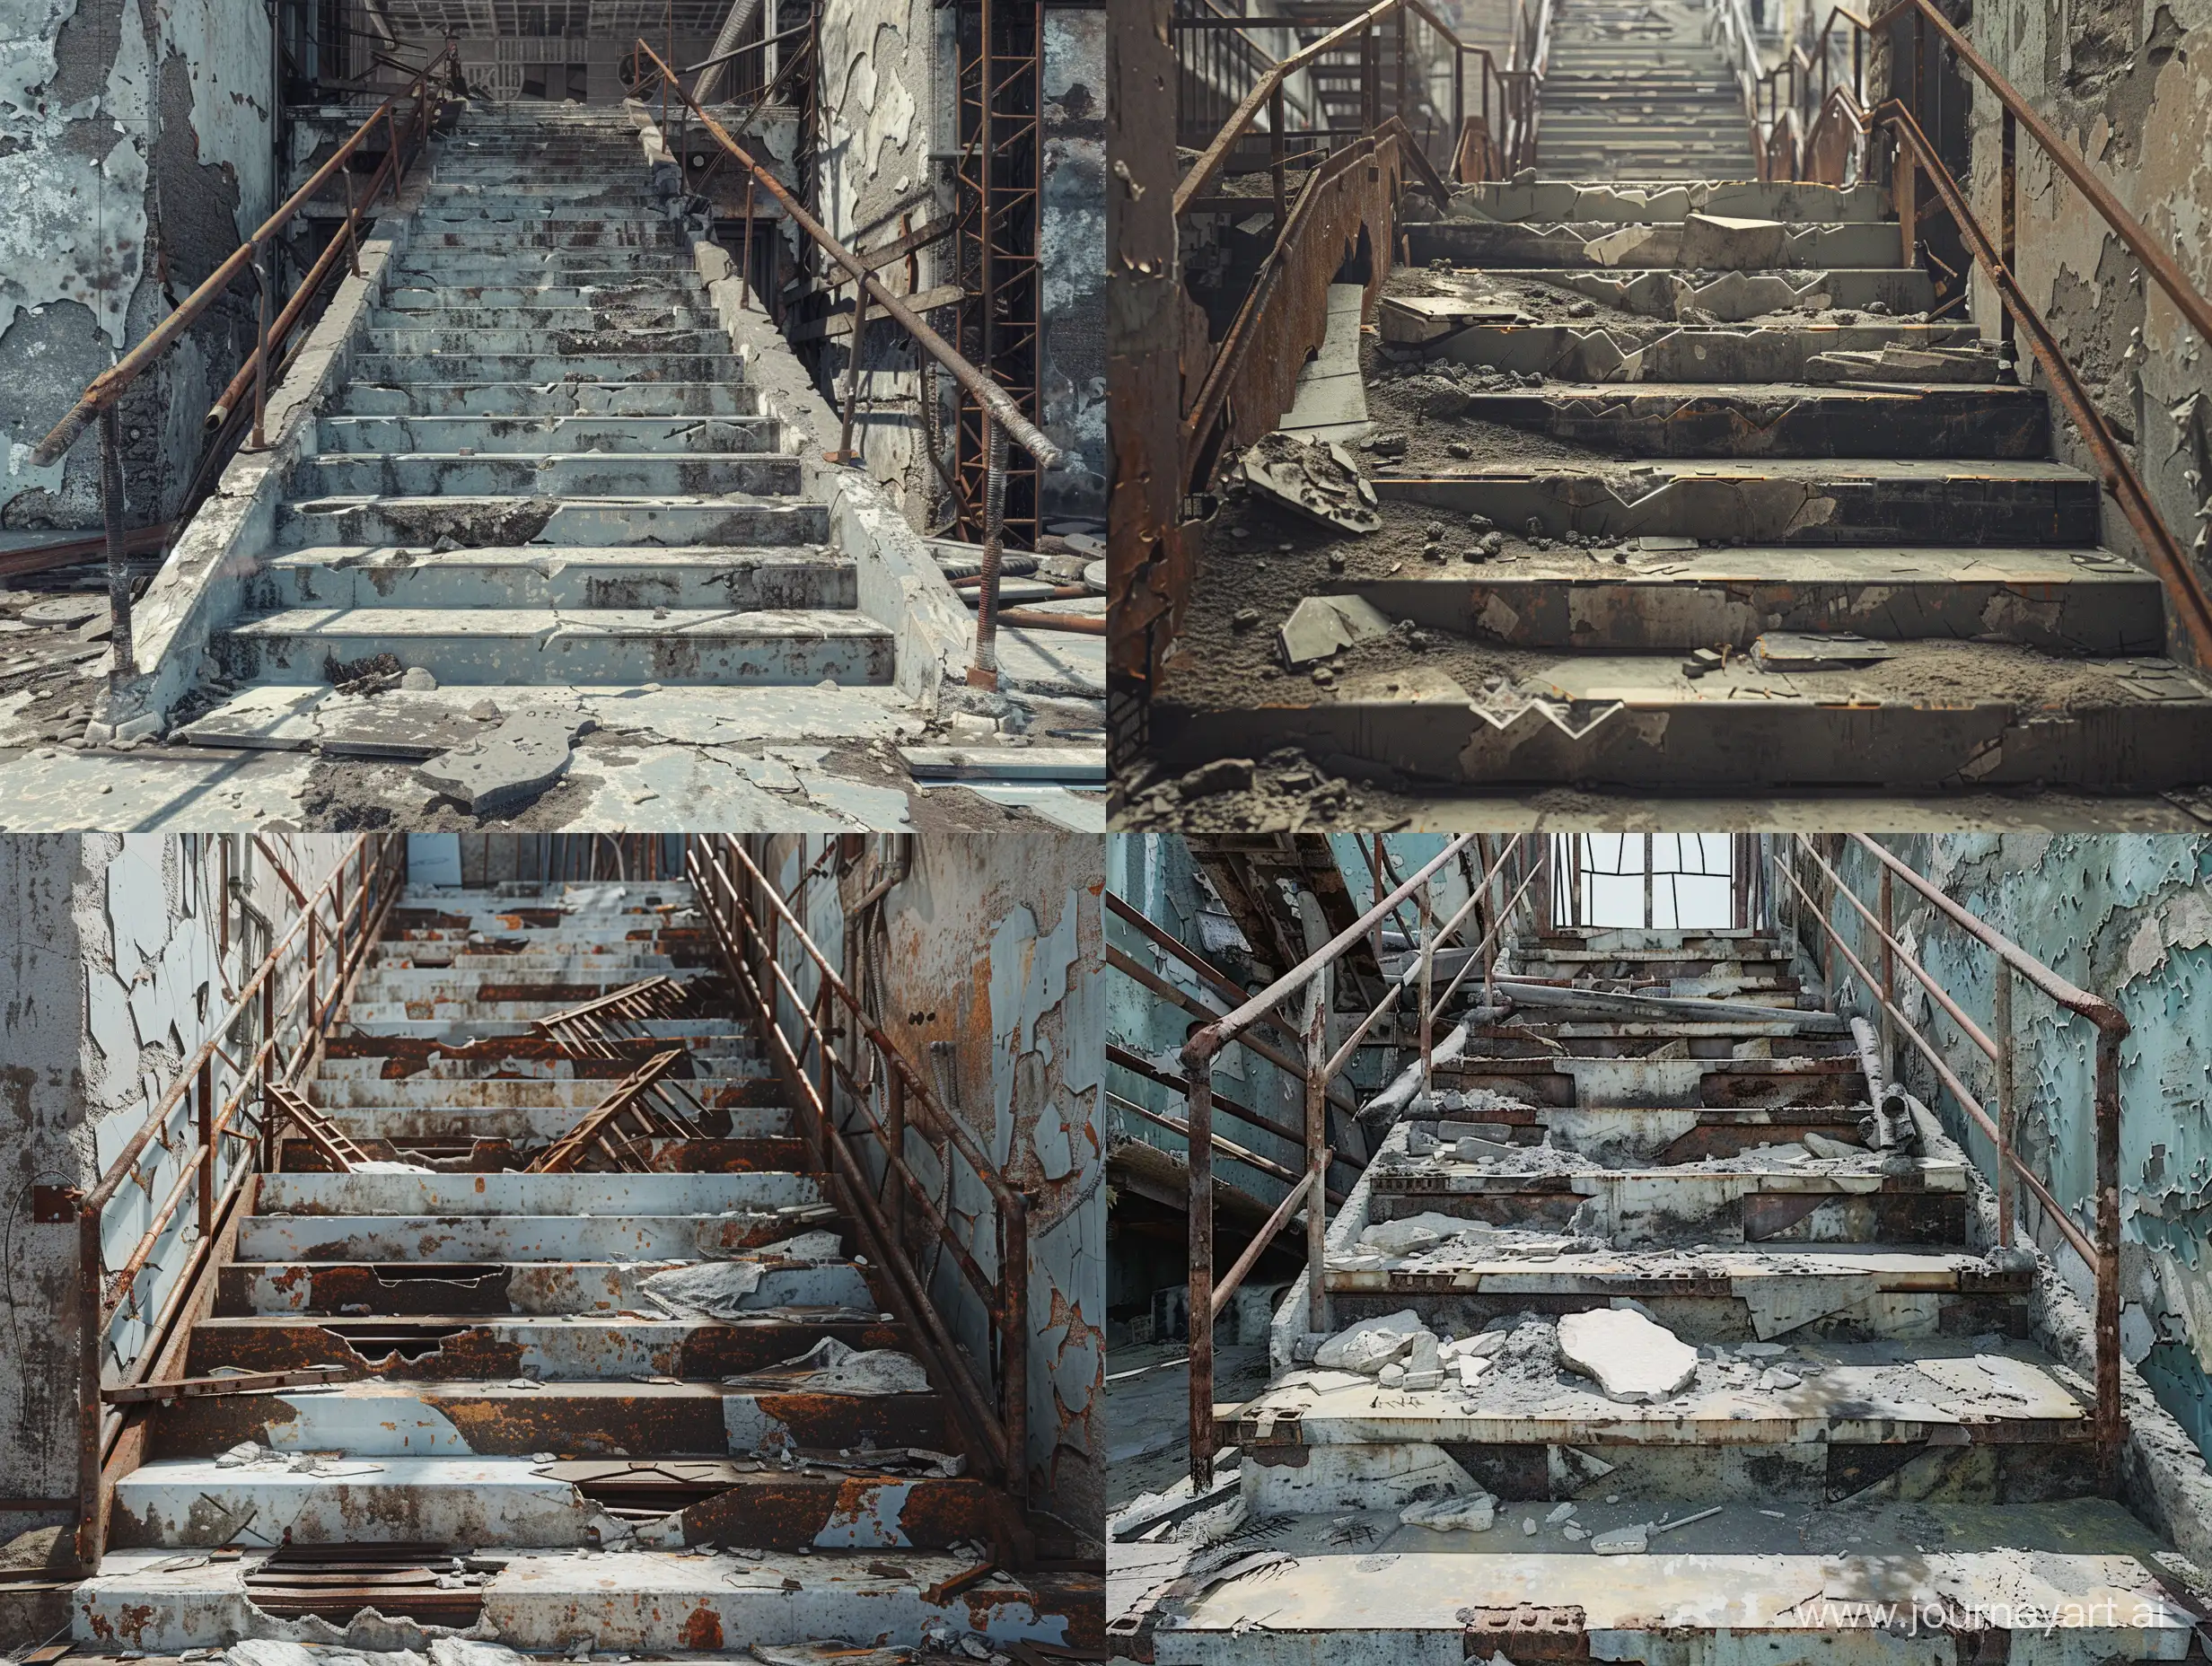 PostApocalyptic-Brutalist-Ruins-with-Iron-Debris-Photorealistic-8K-Unreal-Engine-Art